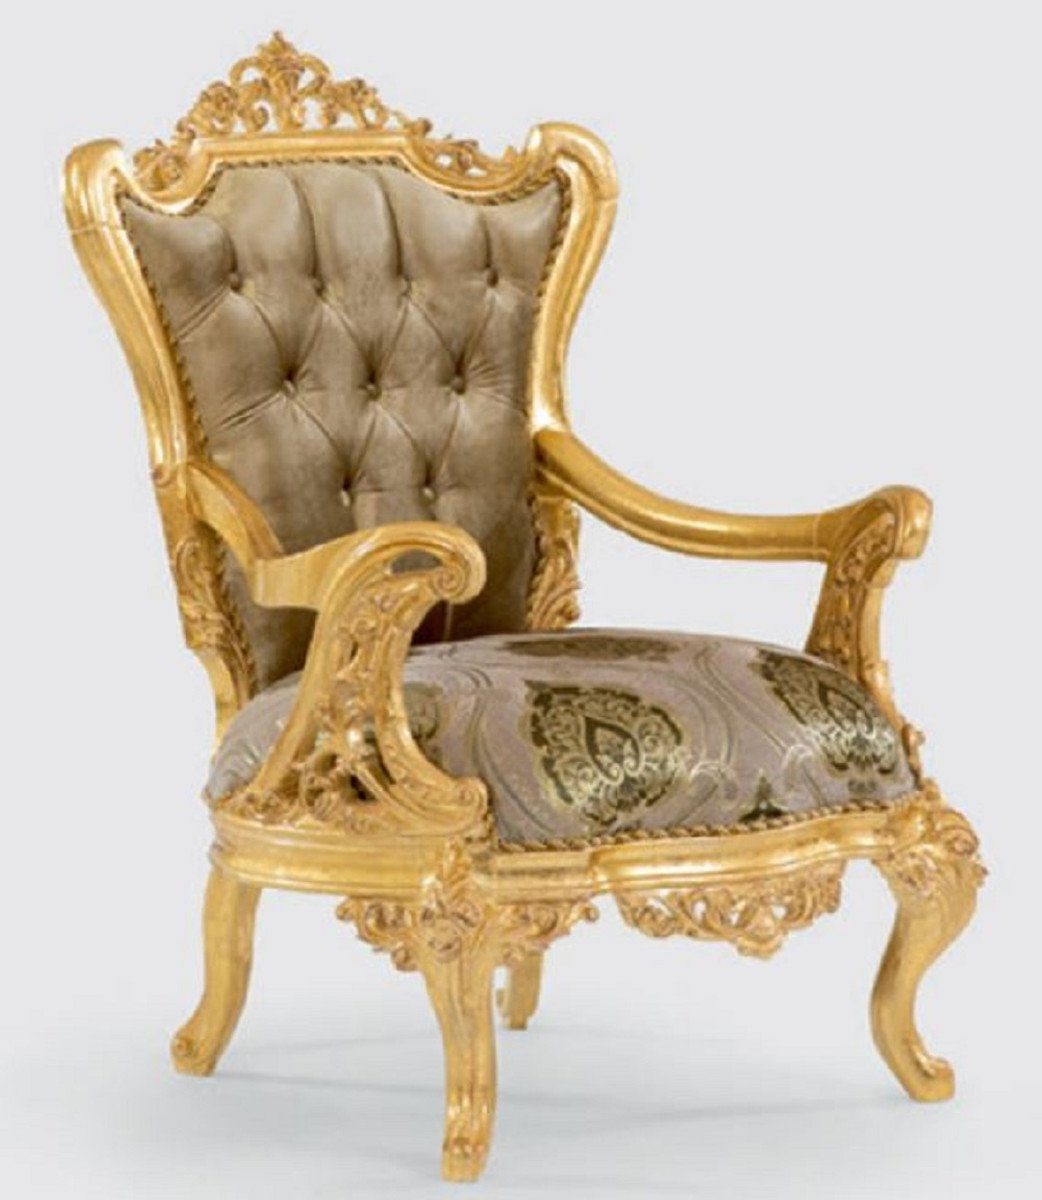 Casa Padrino Sessel Luxus Barock Sessel Grün / Grau / Gold 80 x 80 x H. 116 cm - Handgefertigter Wohnzimmer Sessel mit elegantem Muster - Barock Wohnzimmer Möbel - Edel & Prunkvoll